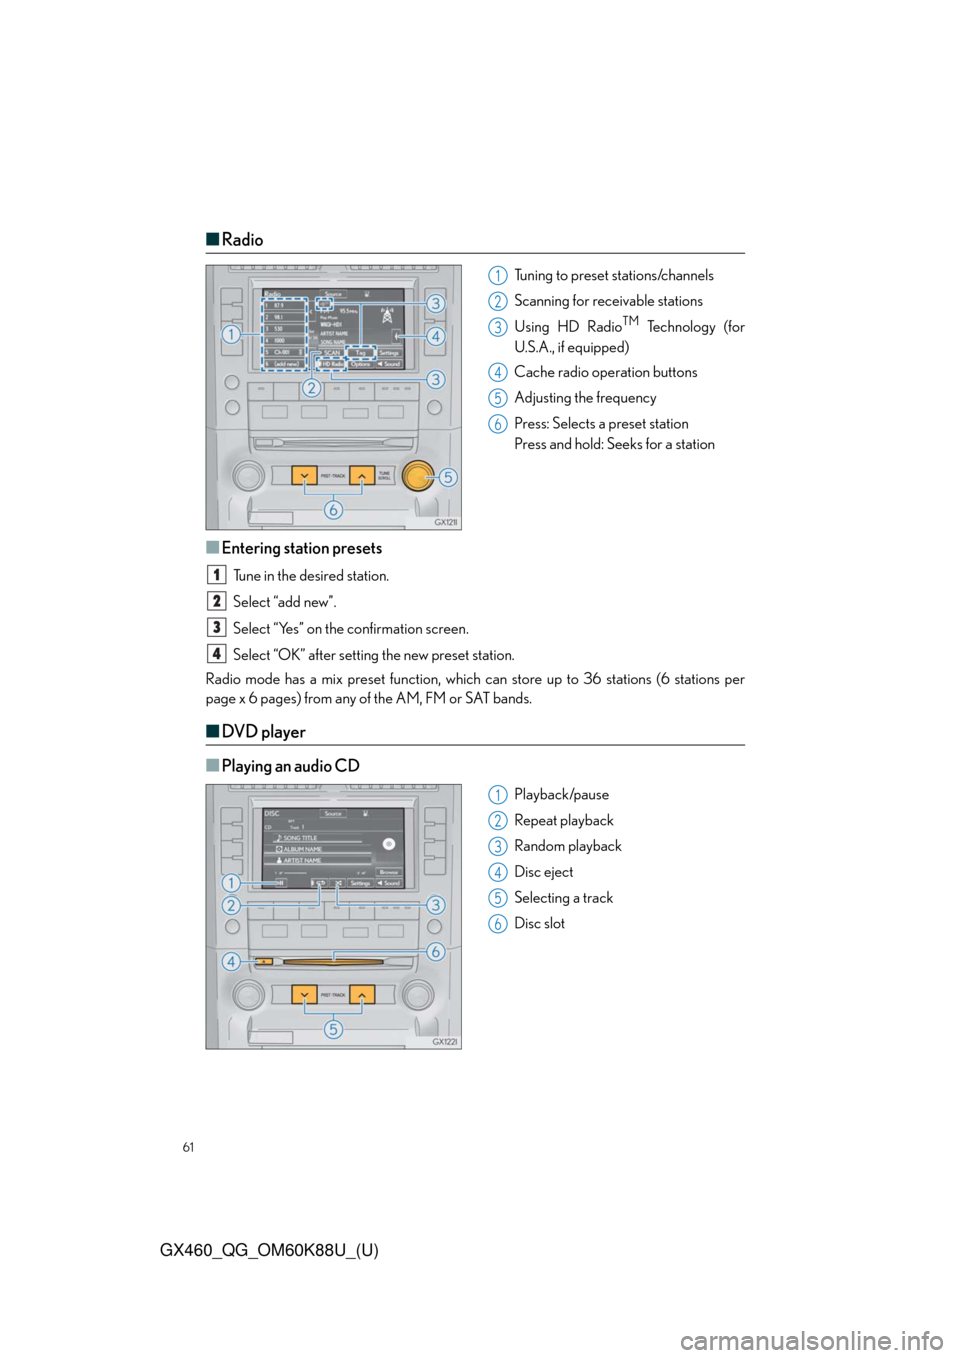 Lexus GX460 2014  Key information / LEXUS 2014 GX460 QUICK GUIDE OWNERS MANUAL (OM60K88U) 61
GX460_QG_OM60K88U_(U)
■Radio
Tuning to preset stations/channels
Scanning for receivable stations
Using HD Radio
TM Te c h n o l o g y  ( f o r
U.S.A., if equipped)
Cache radio operation buttons
A